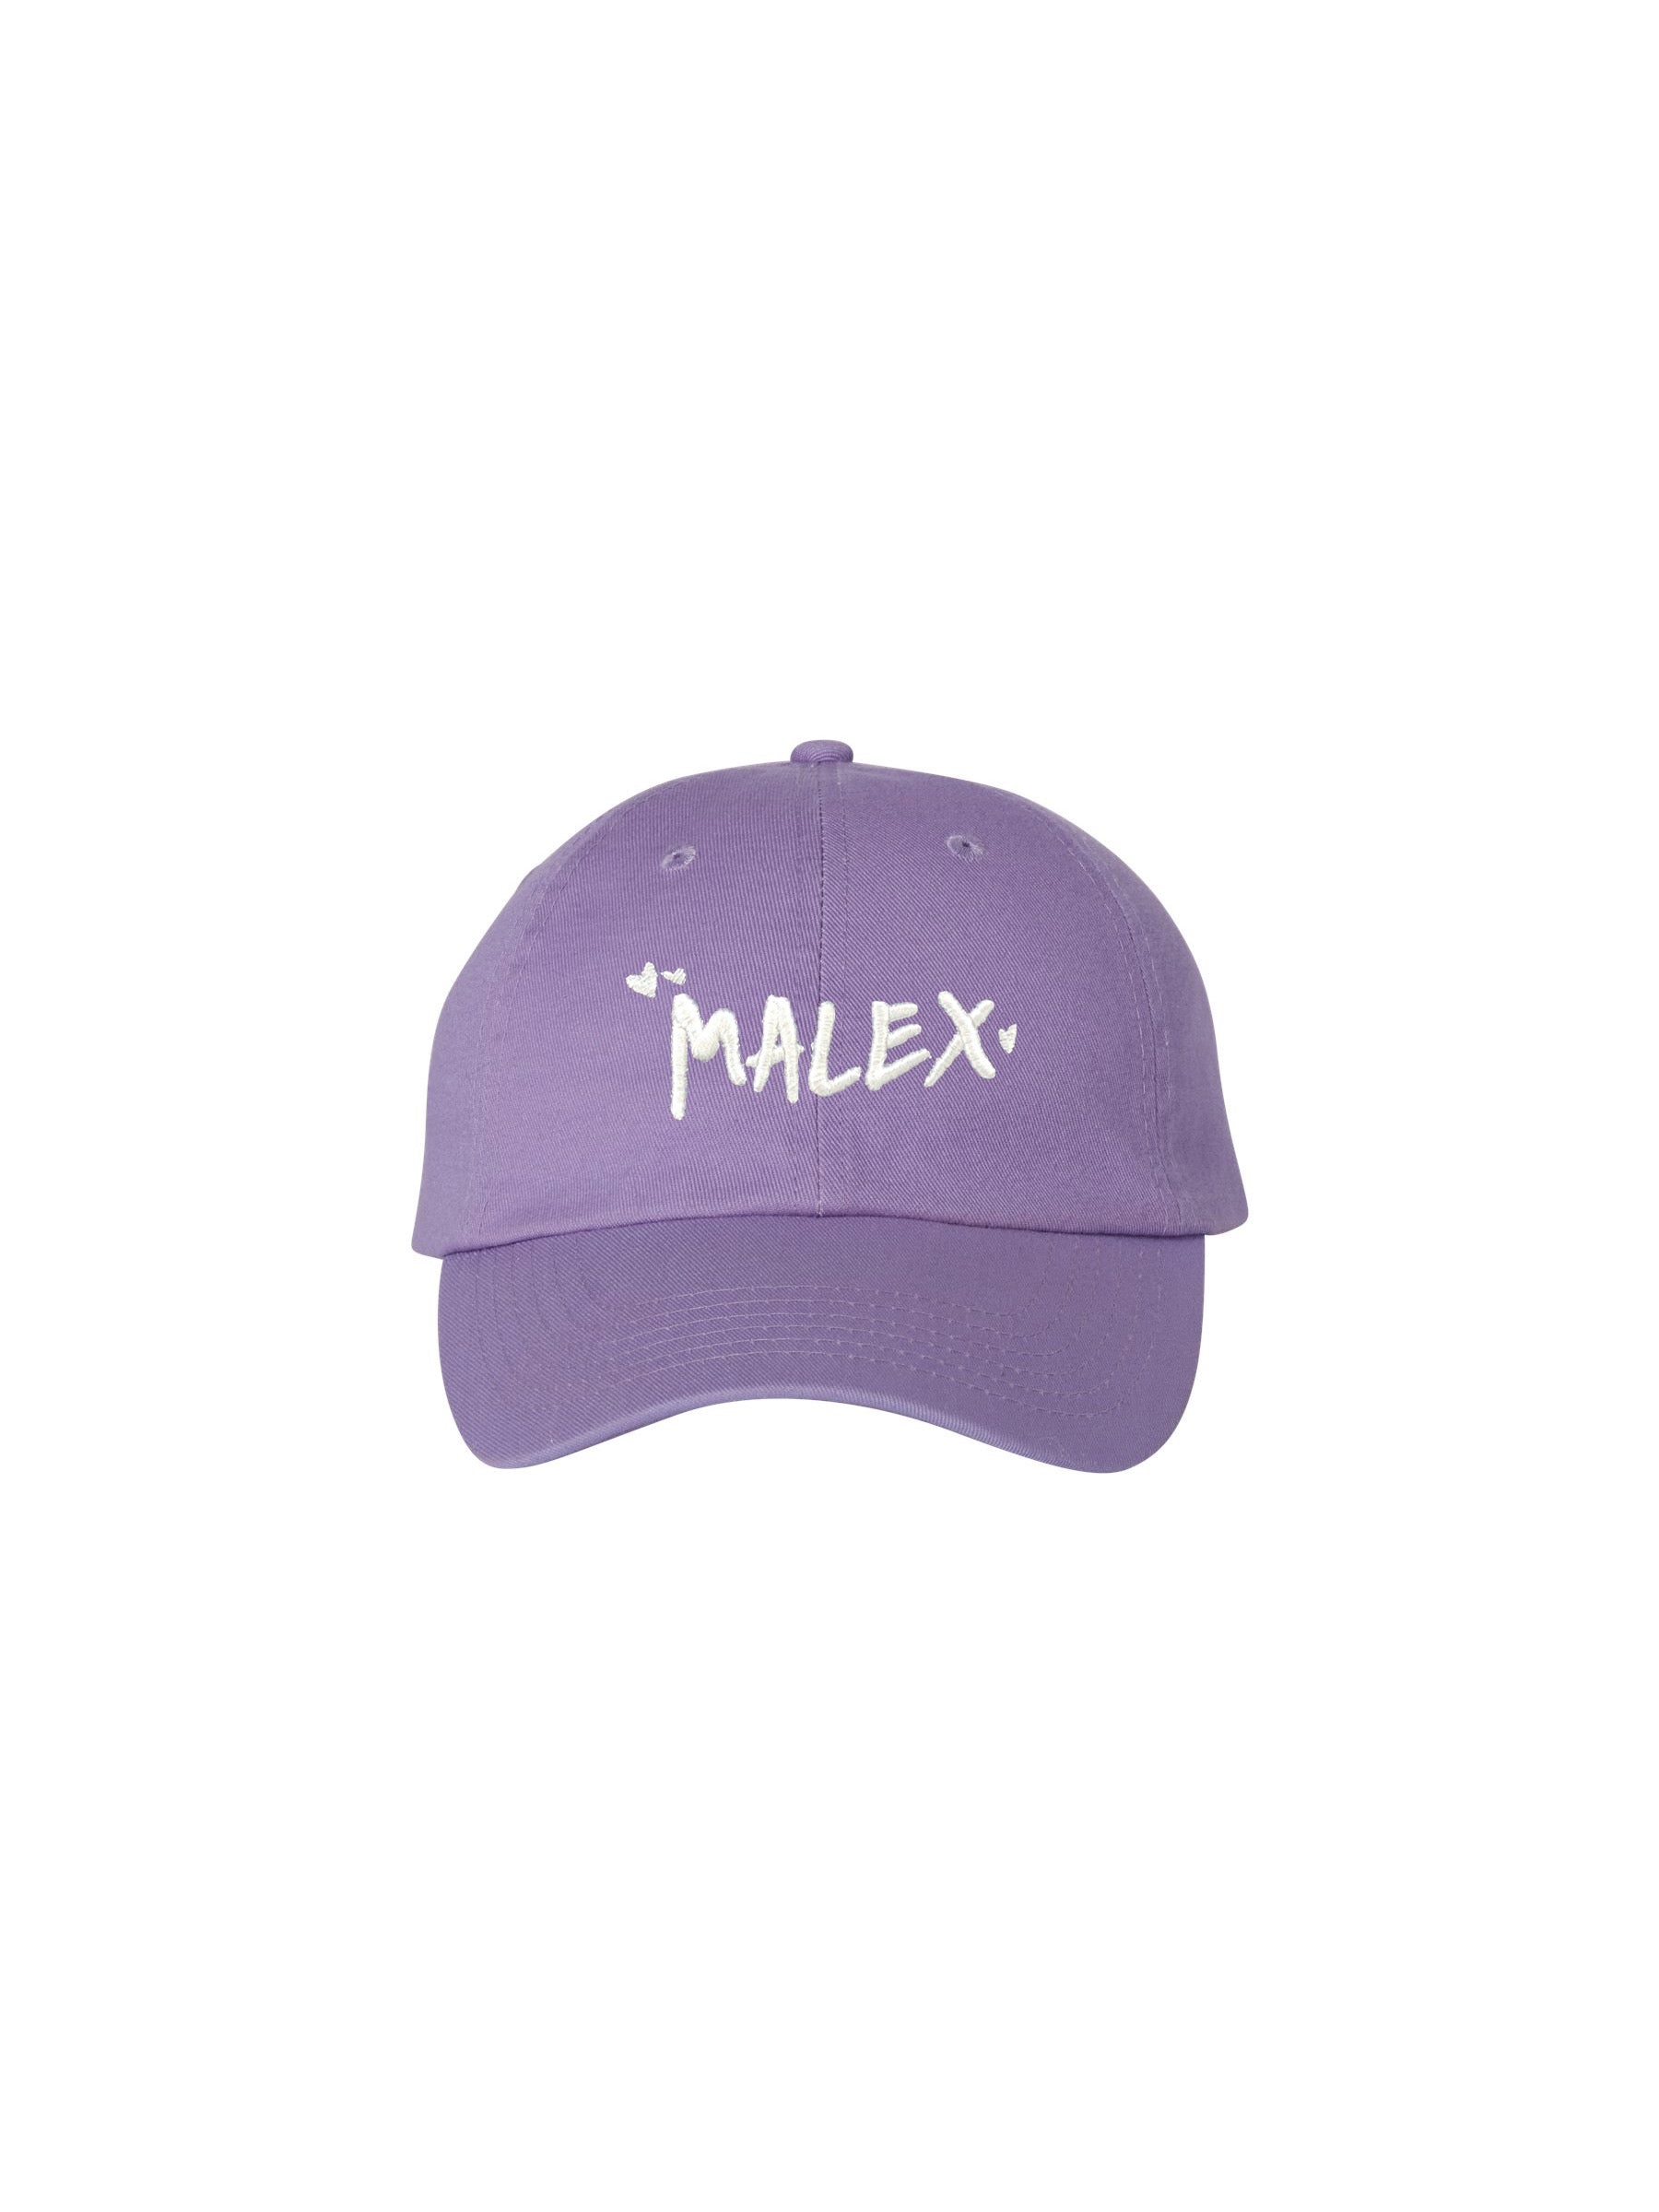 MALEX PURPLE DAD HAT